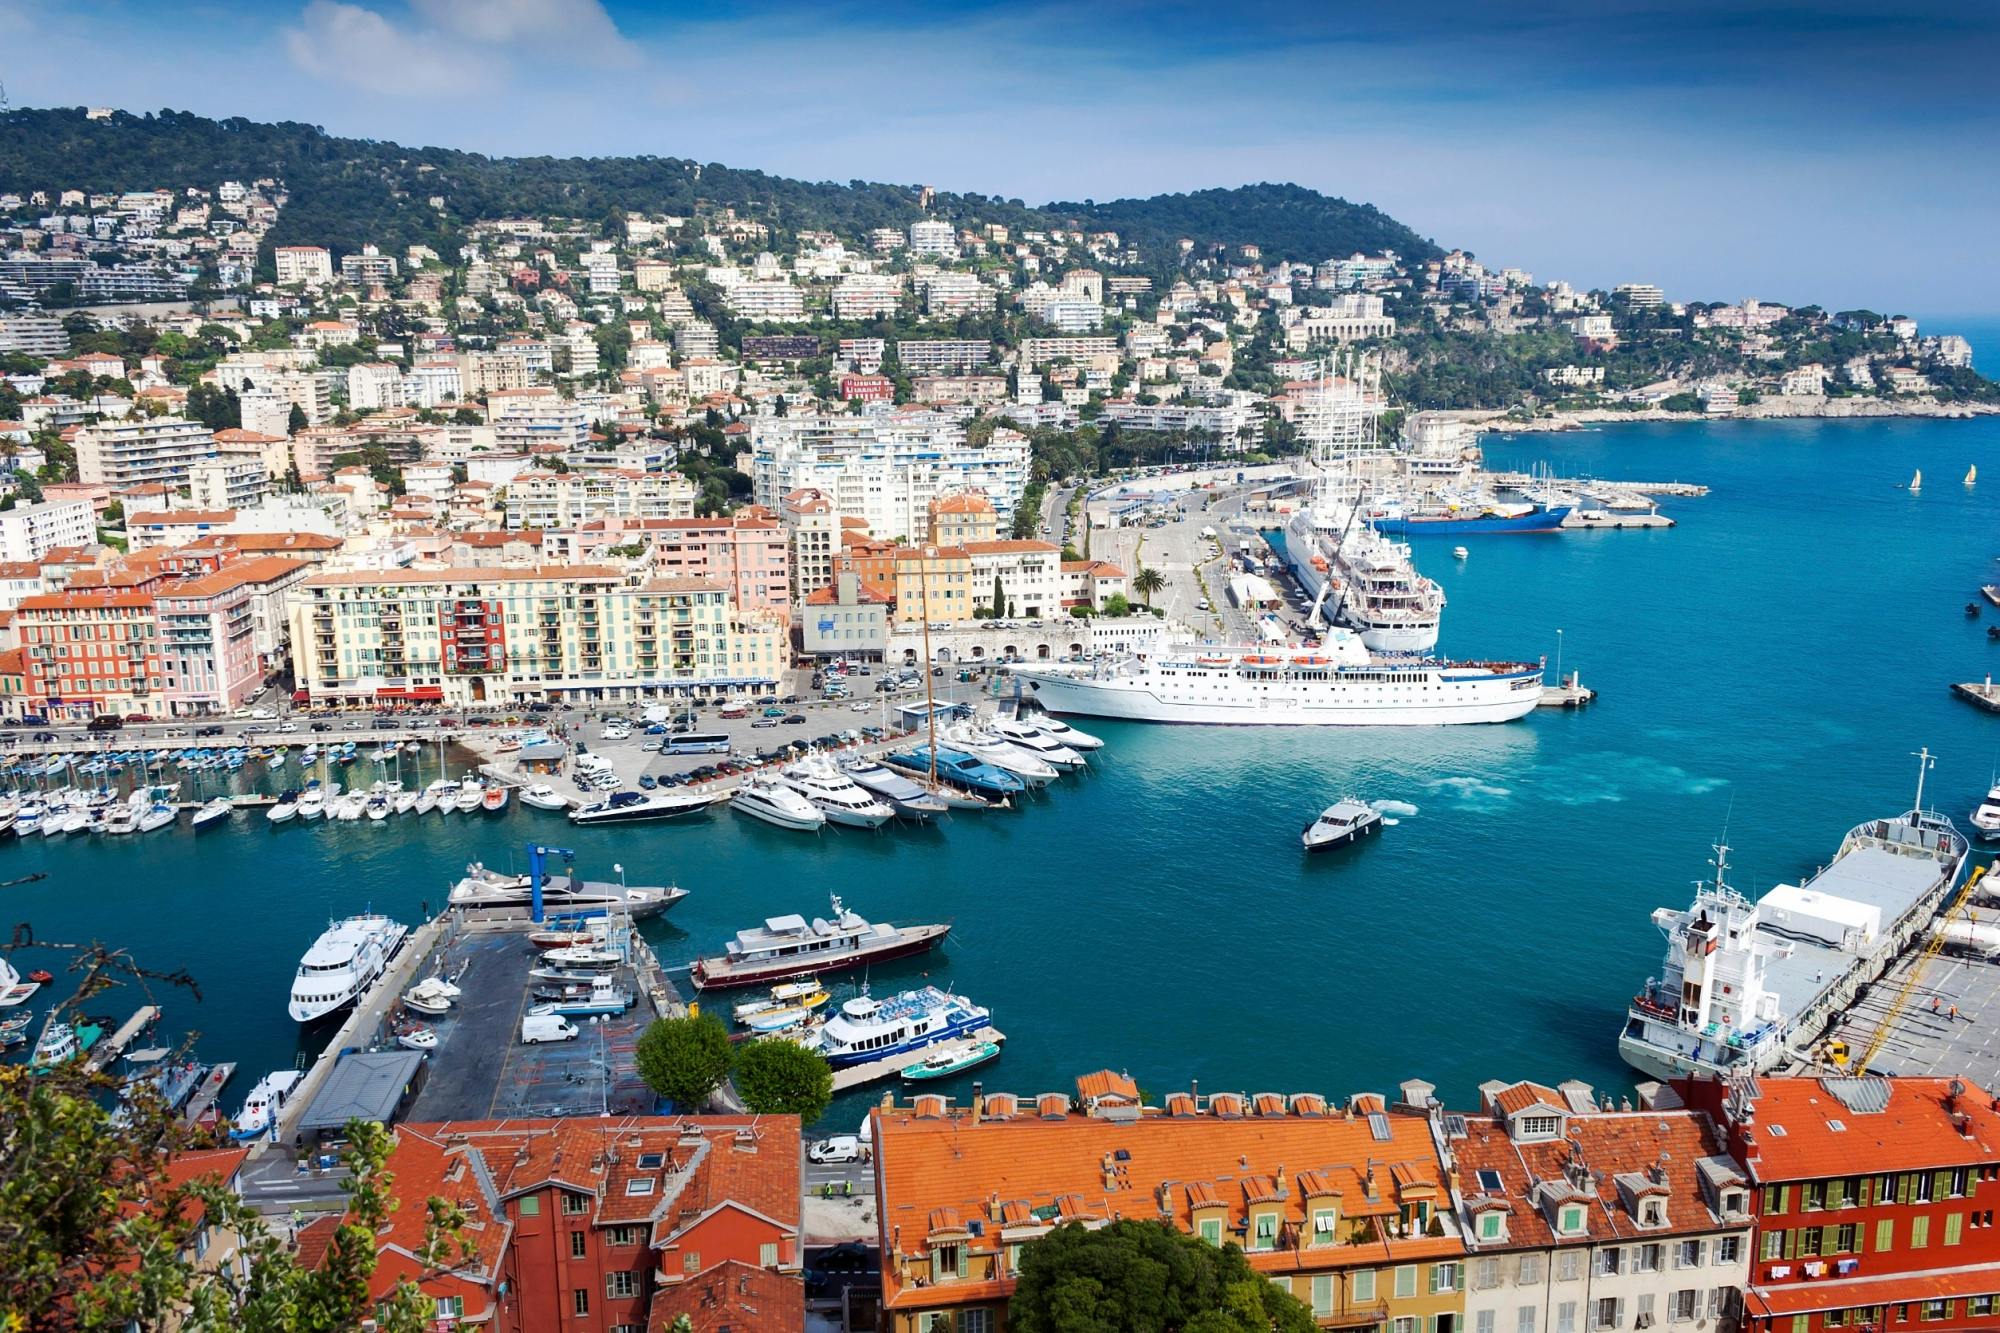 Monaco en Nice volledige dagtour vanuit Milaan